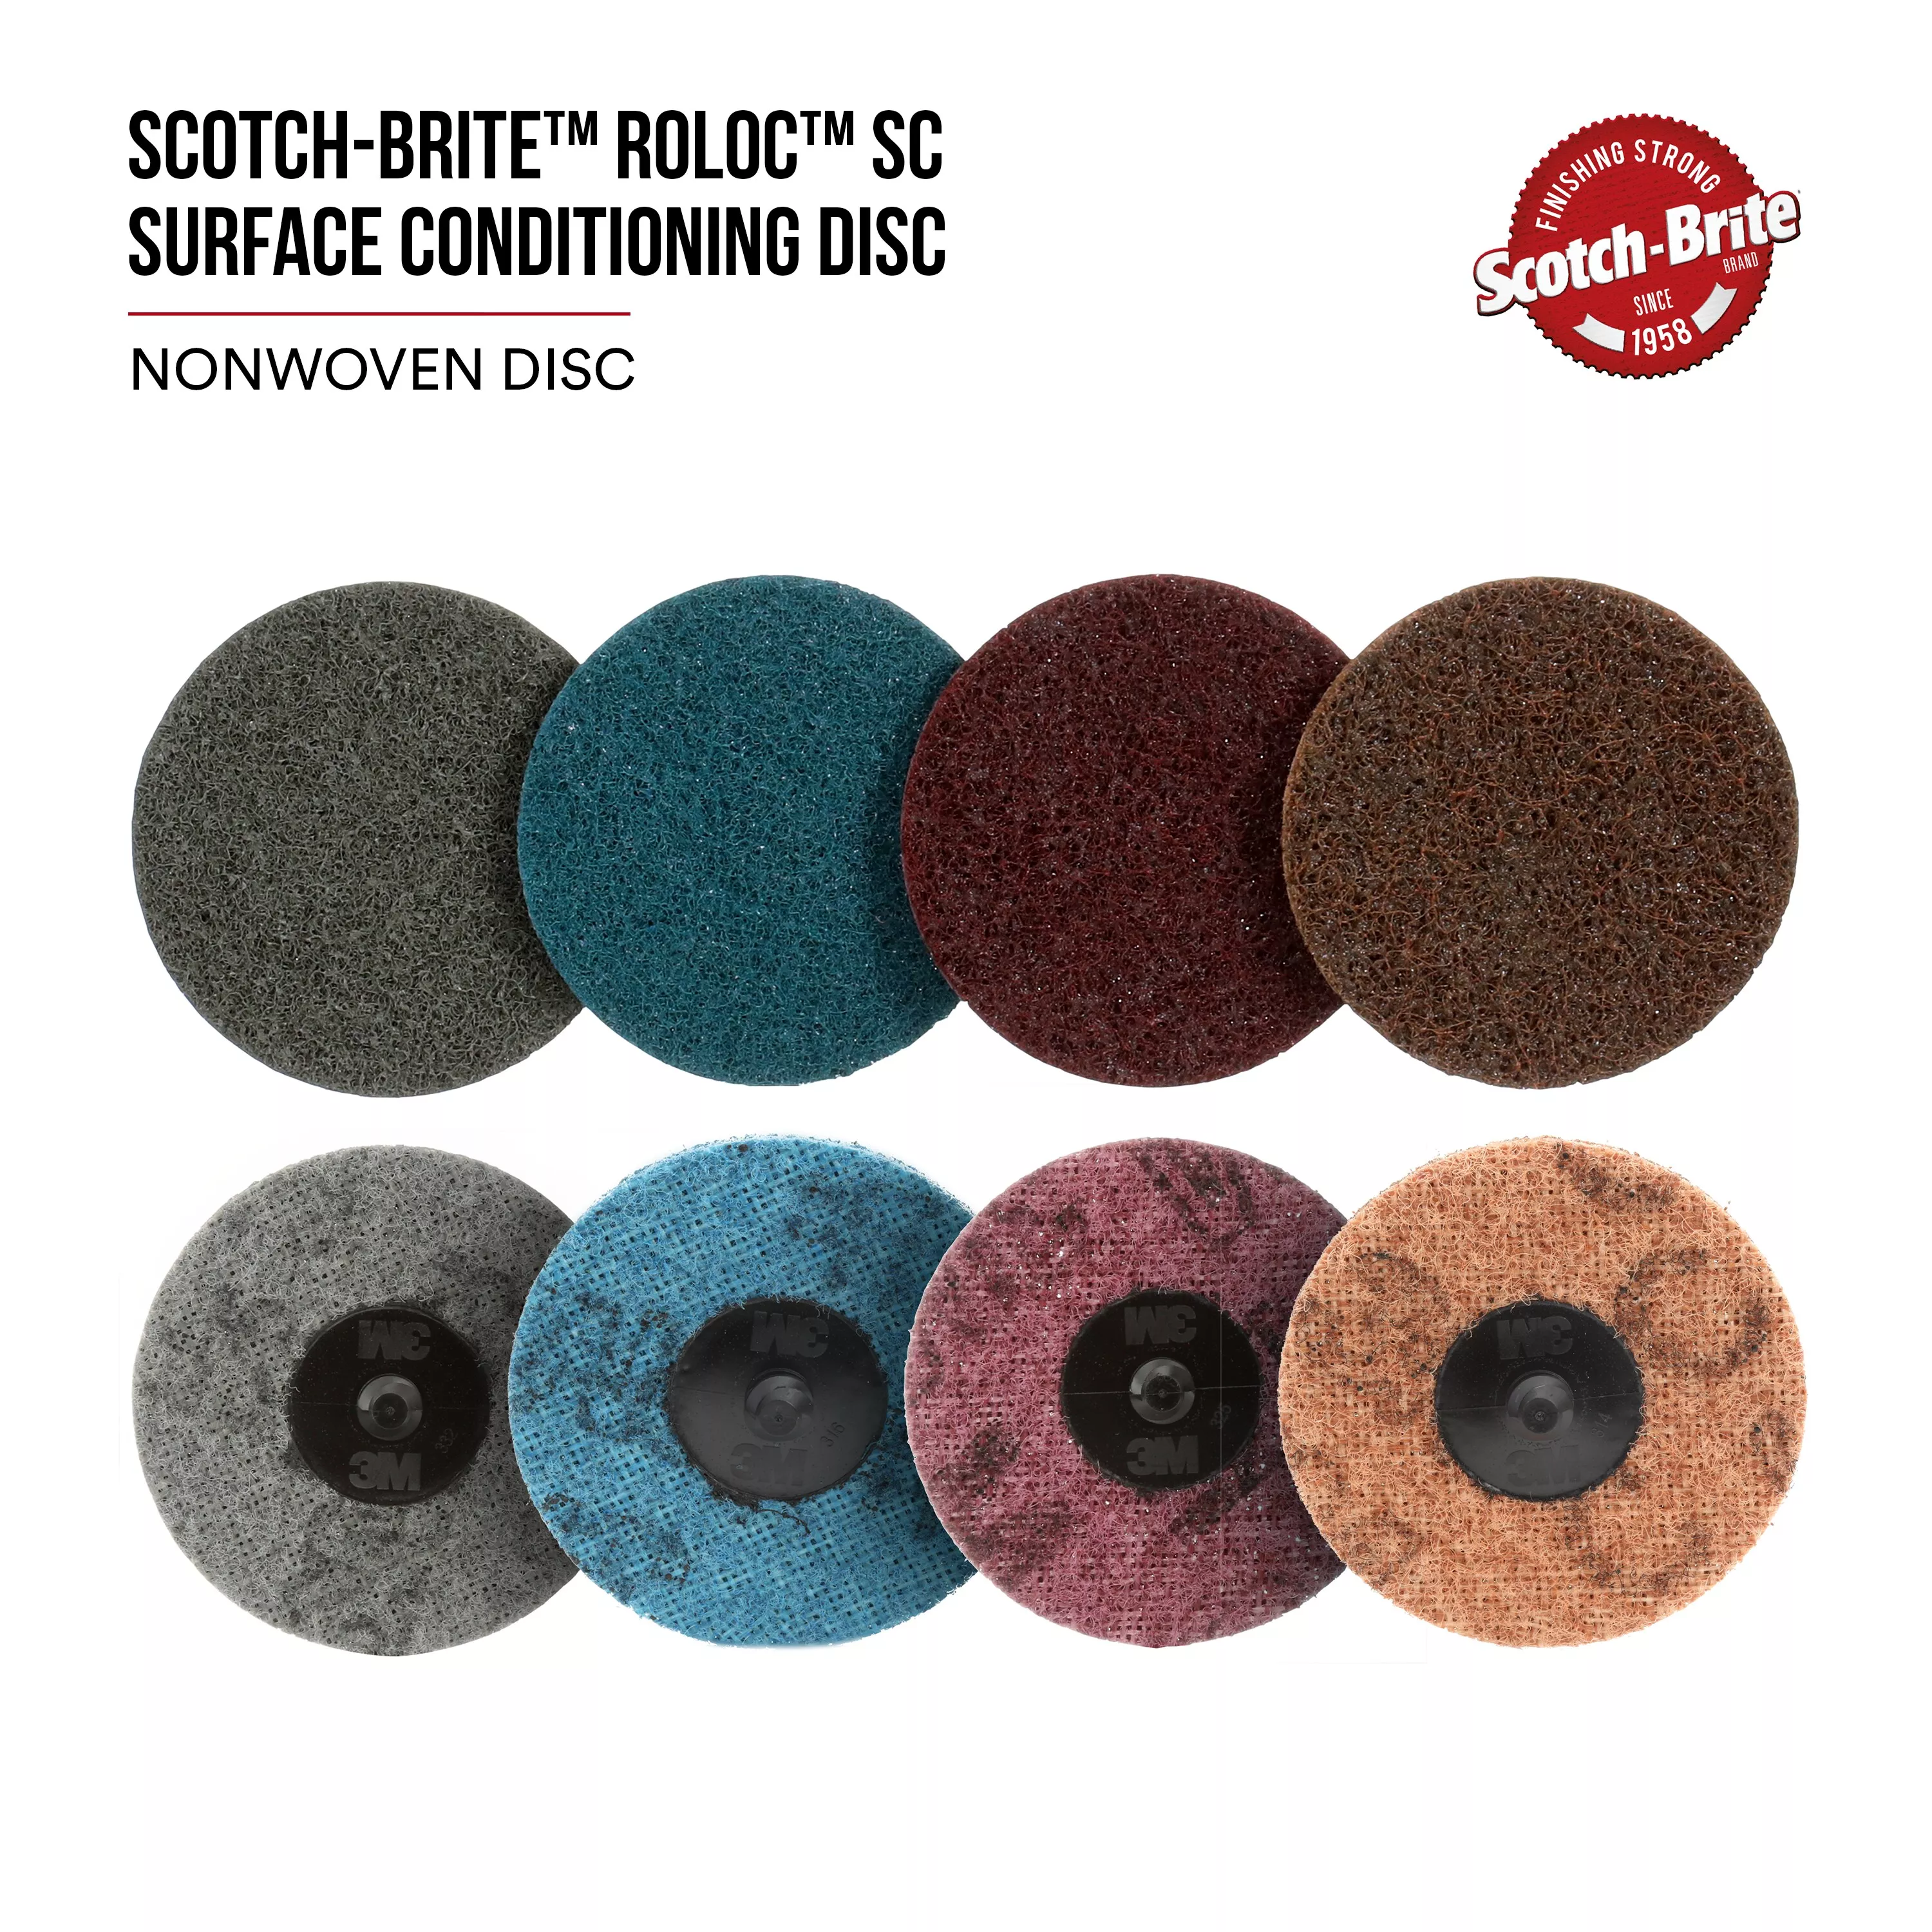 SKU 7000000750 | Scotch-Brite™ Roloc™ Surface Conditioning Disc